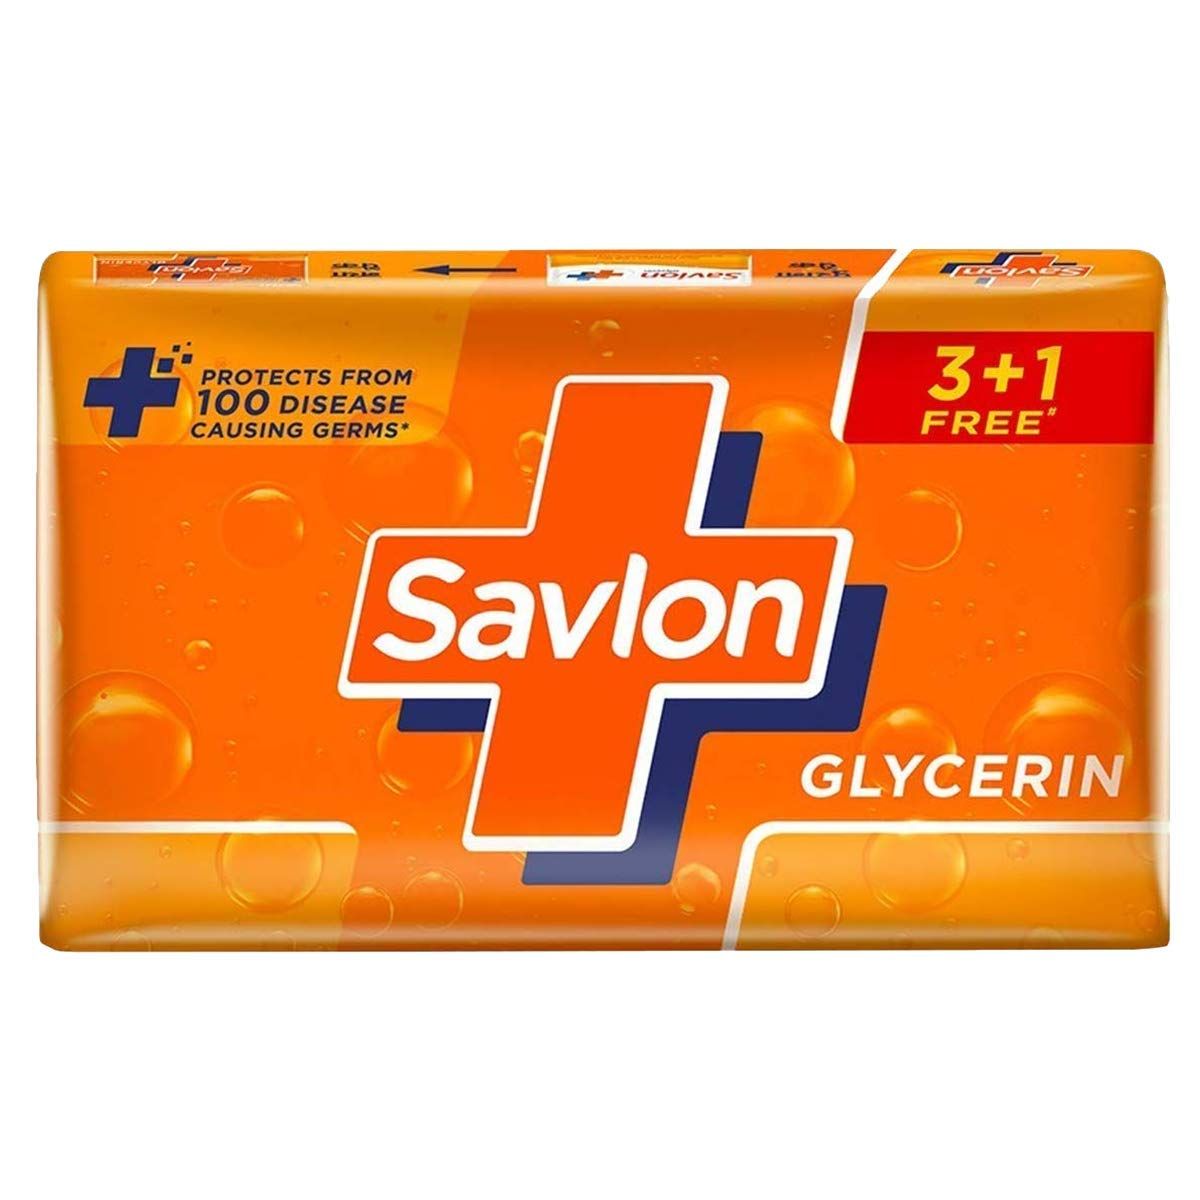 Savlon Moisturizing Glycerin Soap bar (Buy 3 Get 1) with Germ Protection + Savlon Liquid Handwash